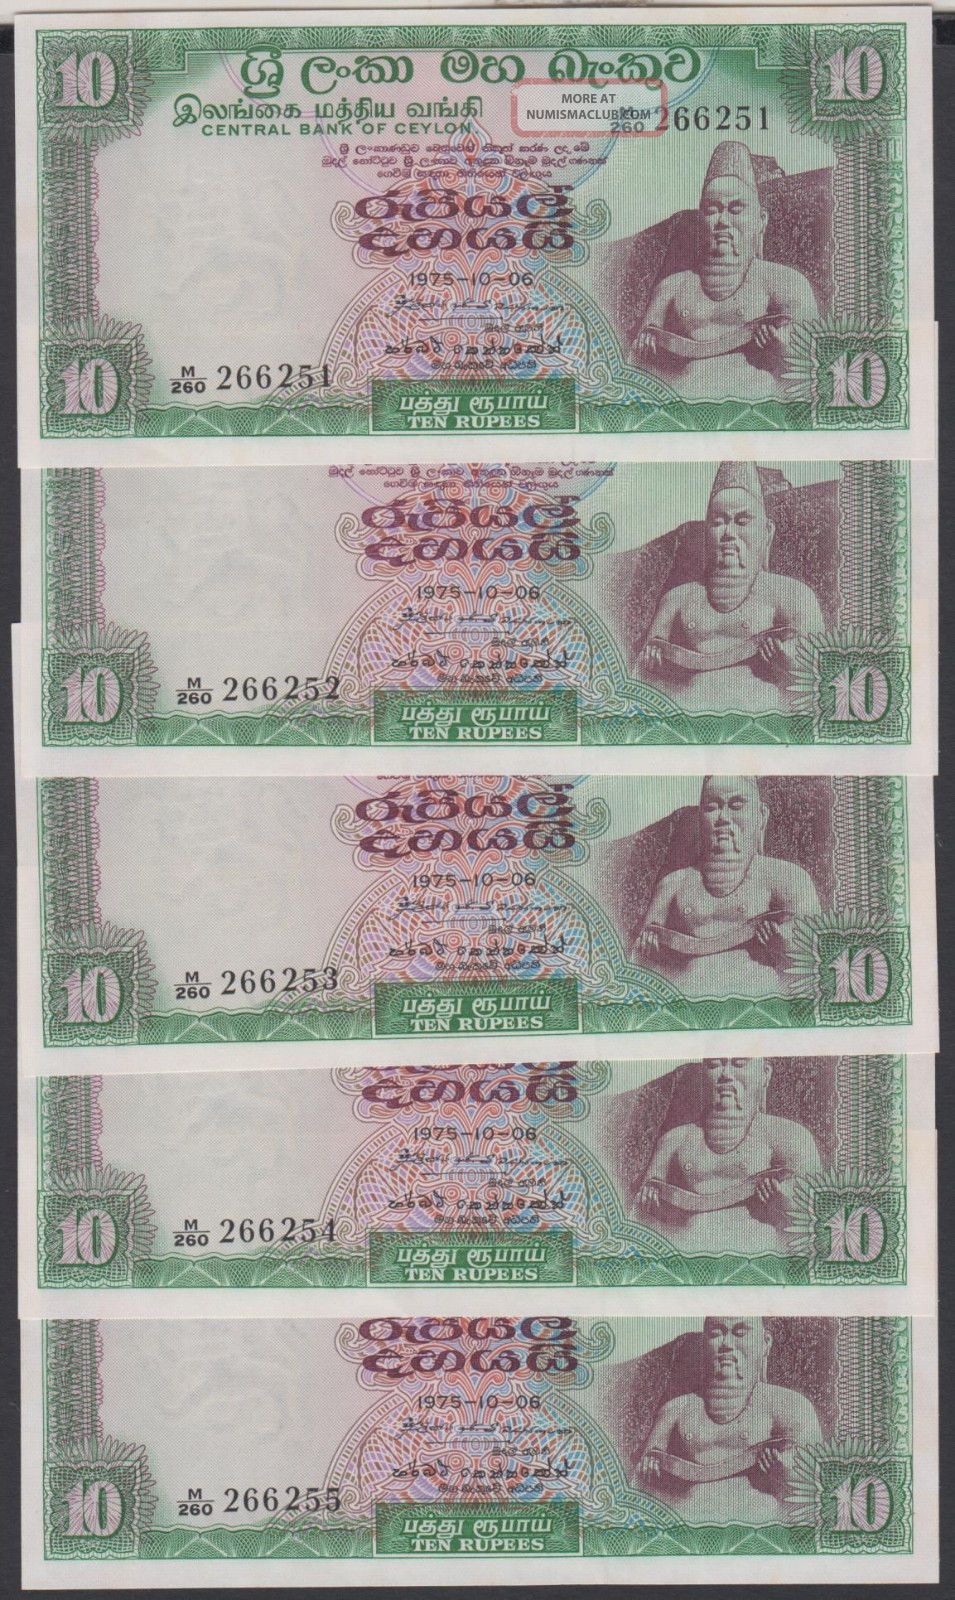 Srilanka (ceylon) 10 Rupees Note,  1975 - 10 - 06,  5 Consecutive Unc Note. Asia photo